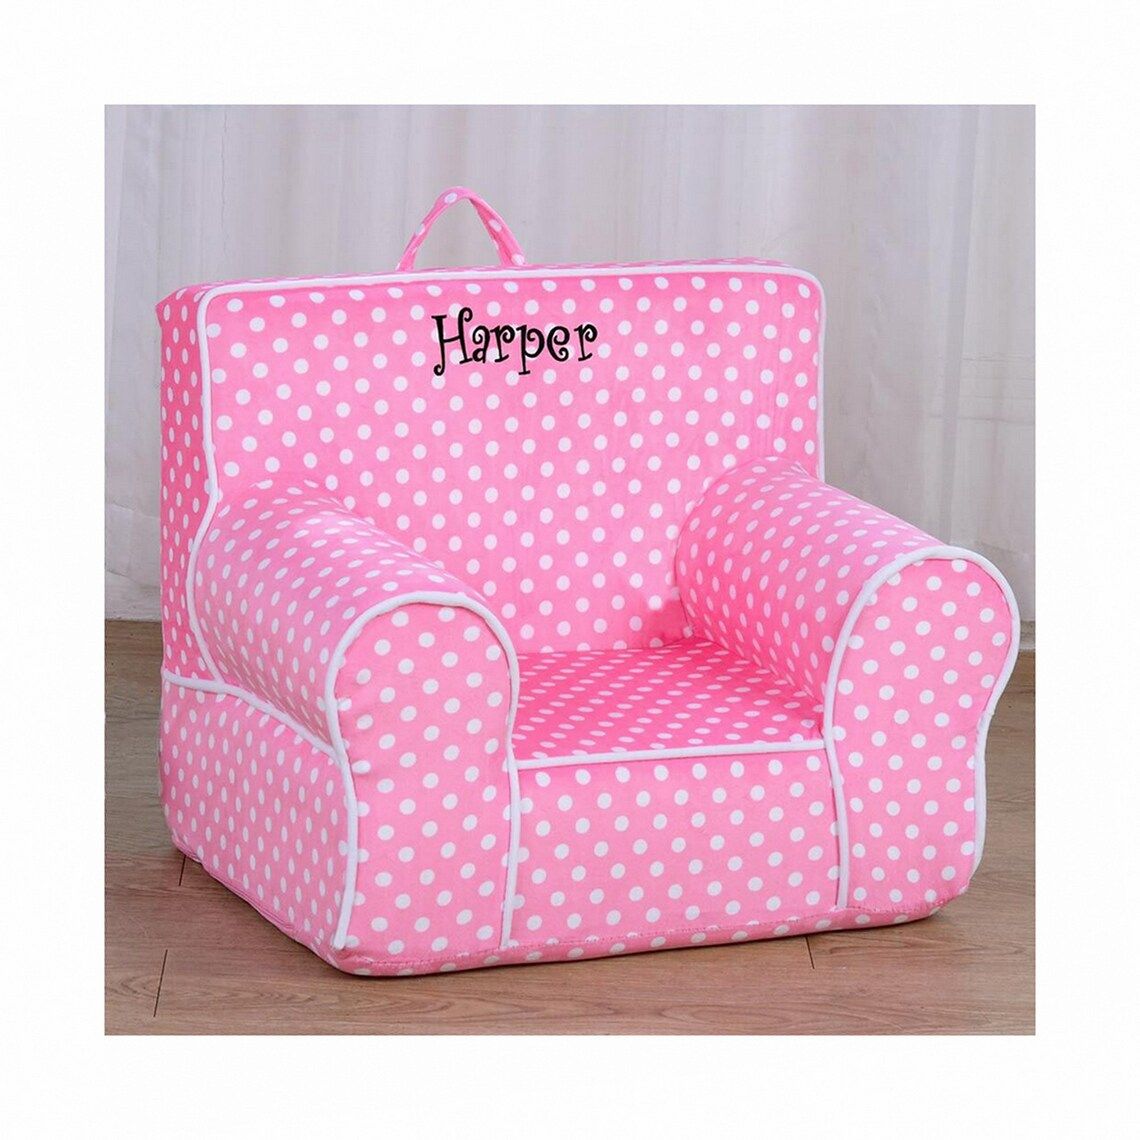 pink polka dot chair monogram of the name Harper